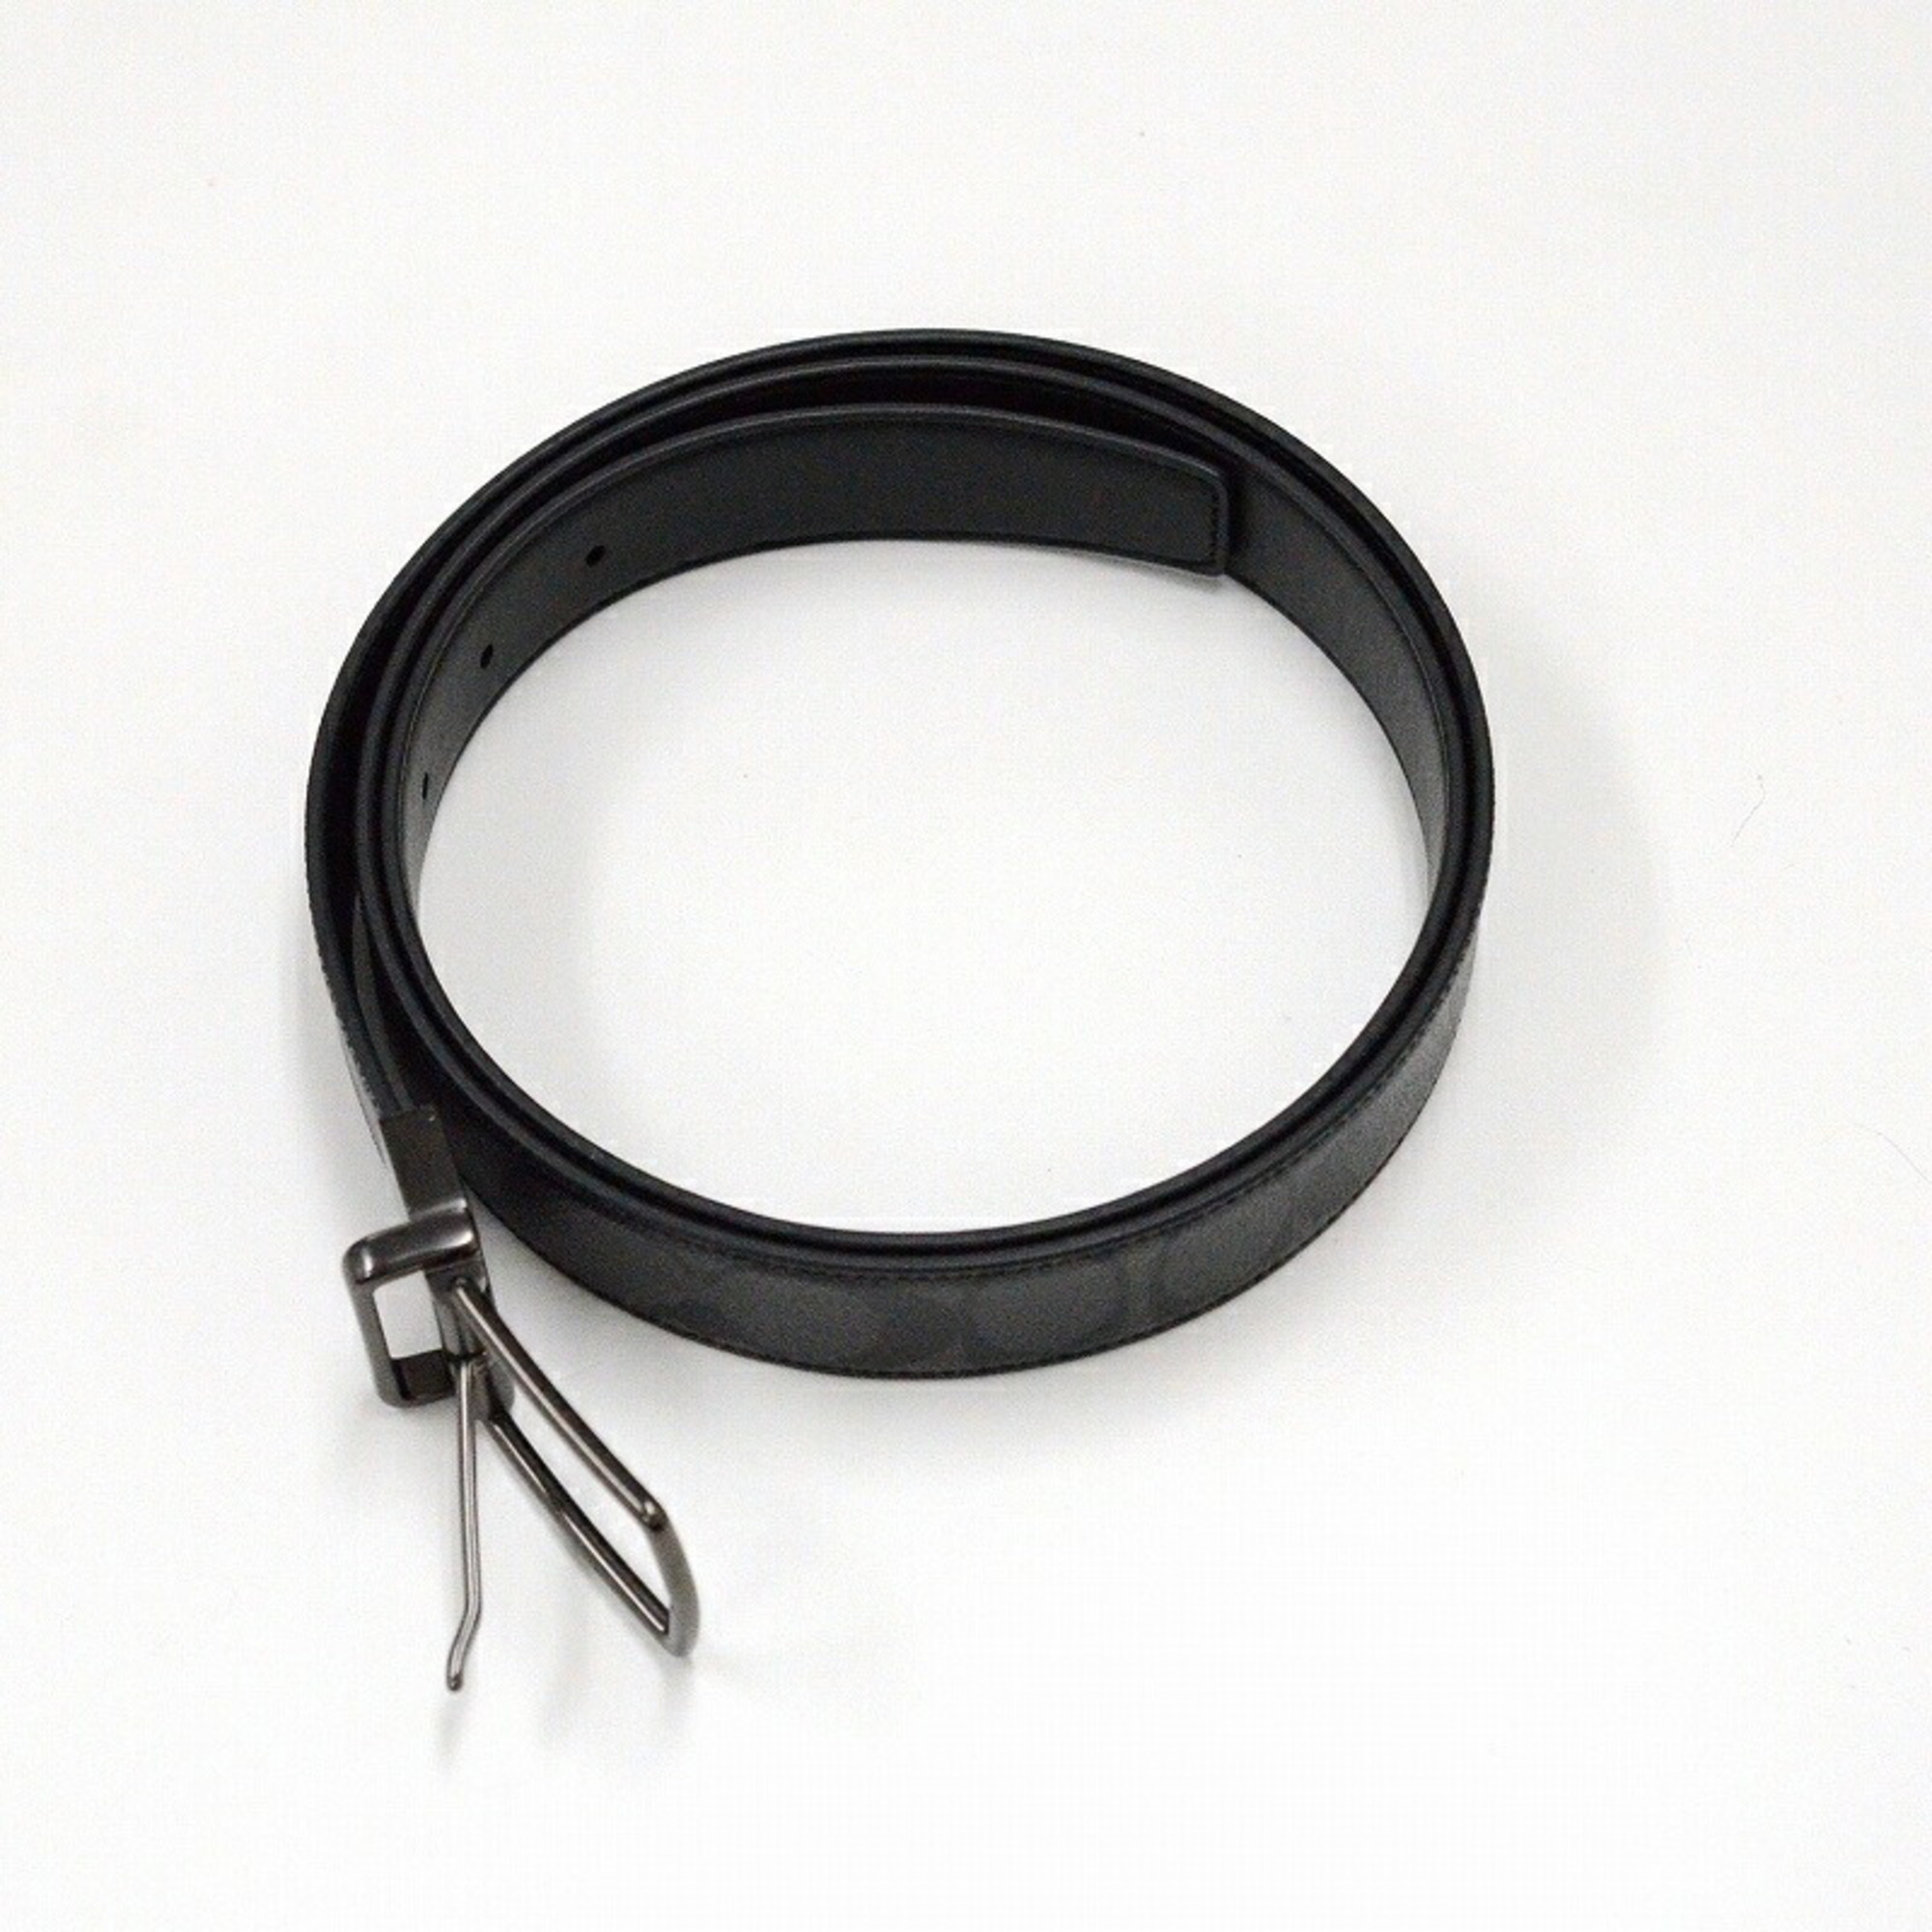 COACH Modern Harness Reversible Men's Belt F64825 102-112cm Gray/Black JA-18754